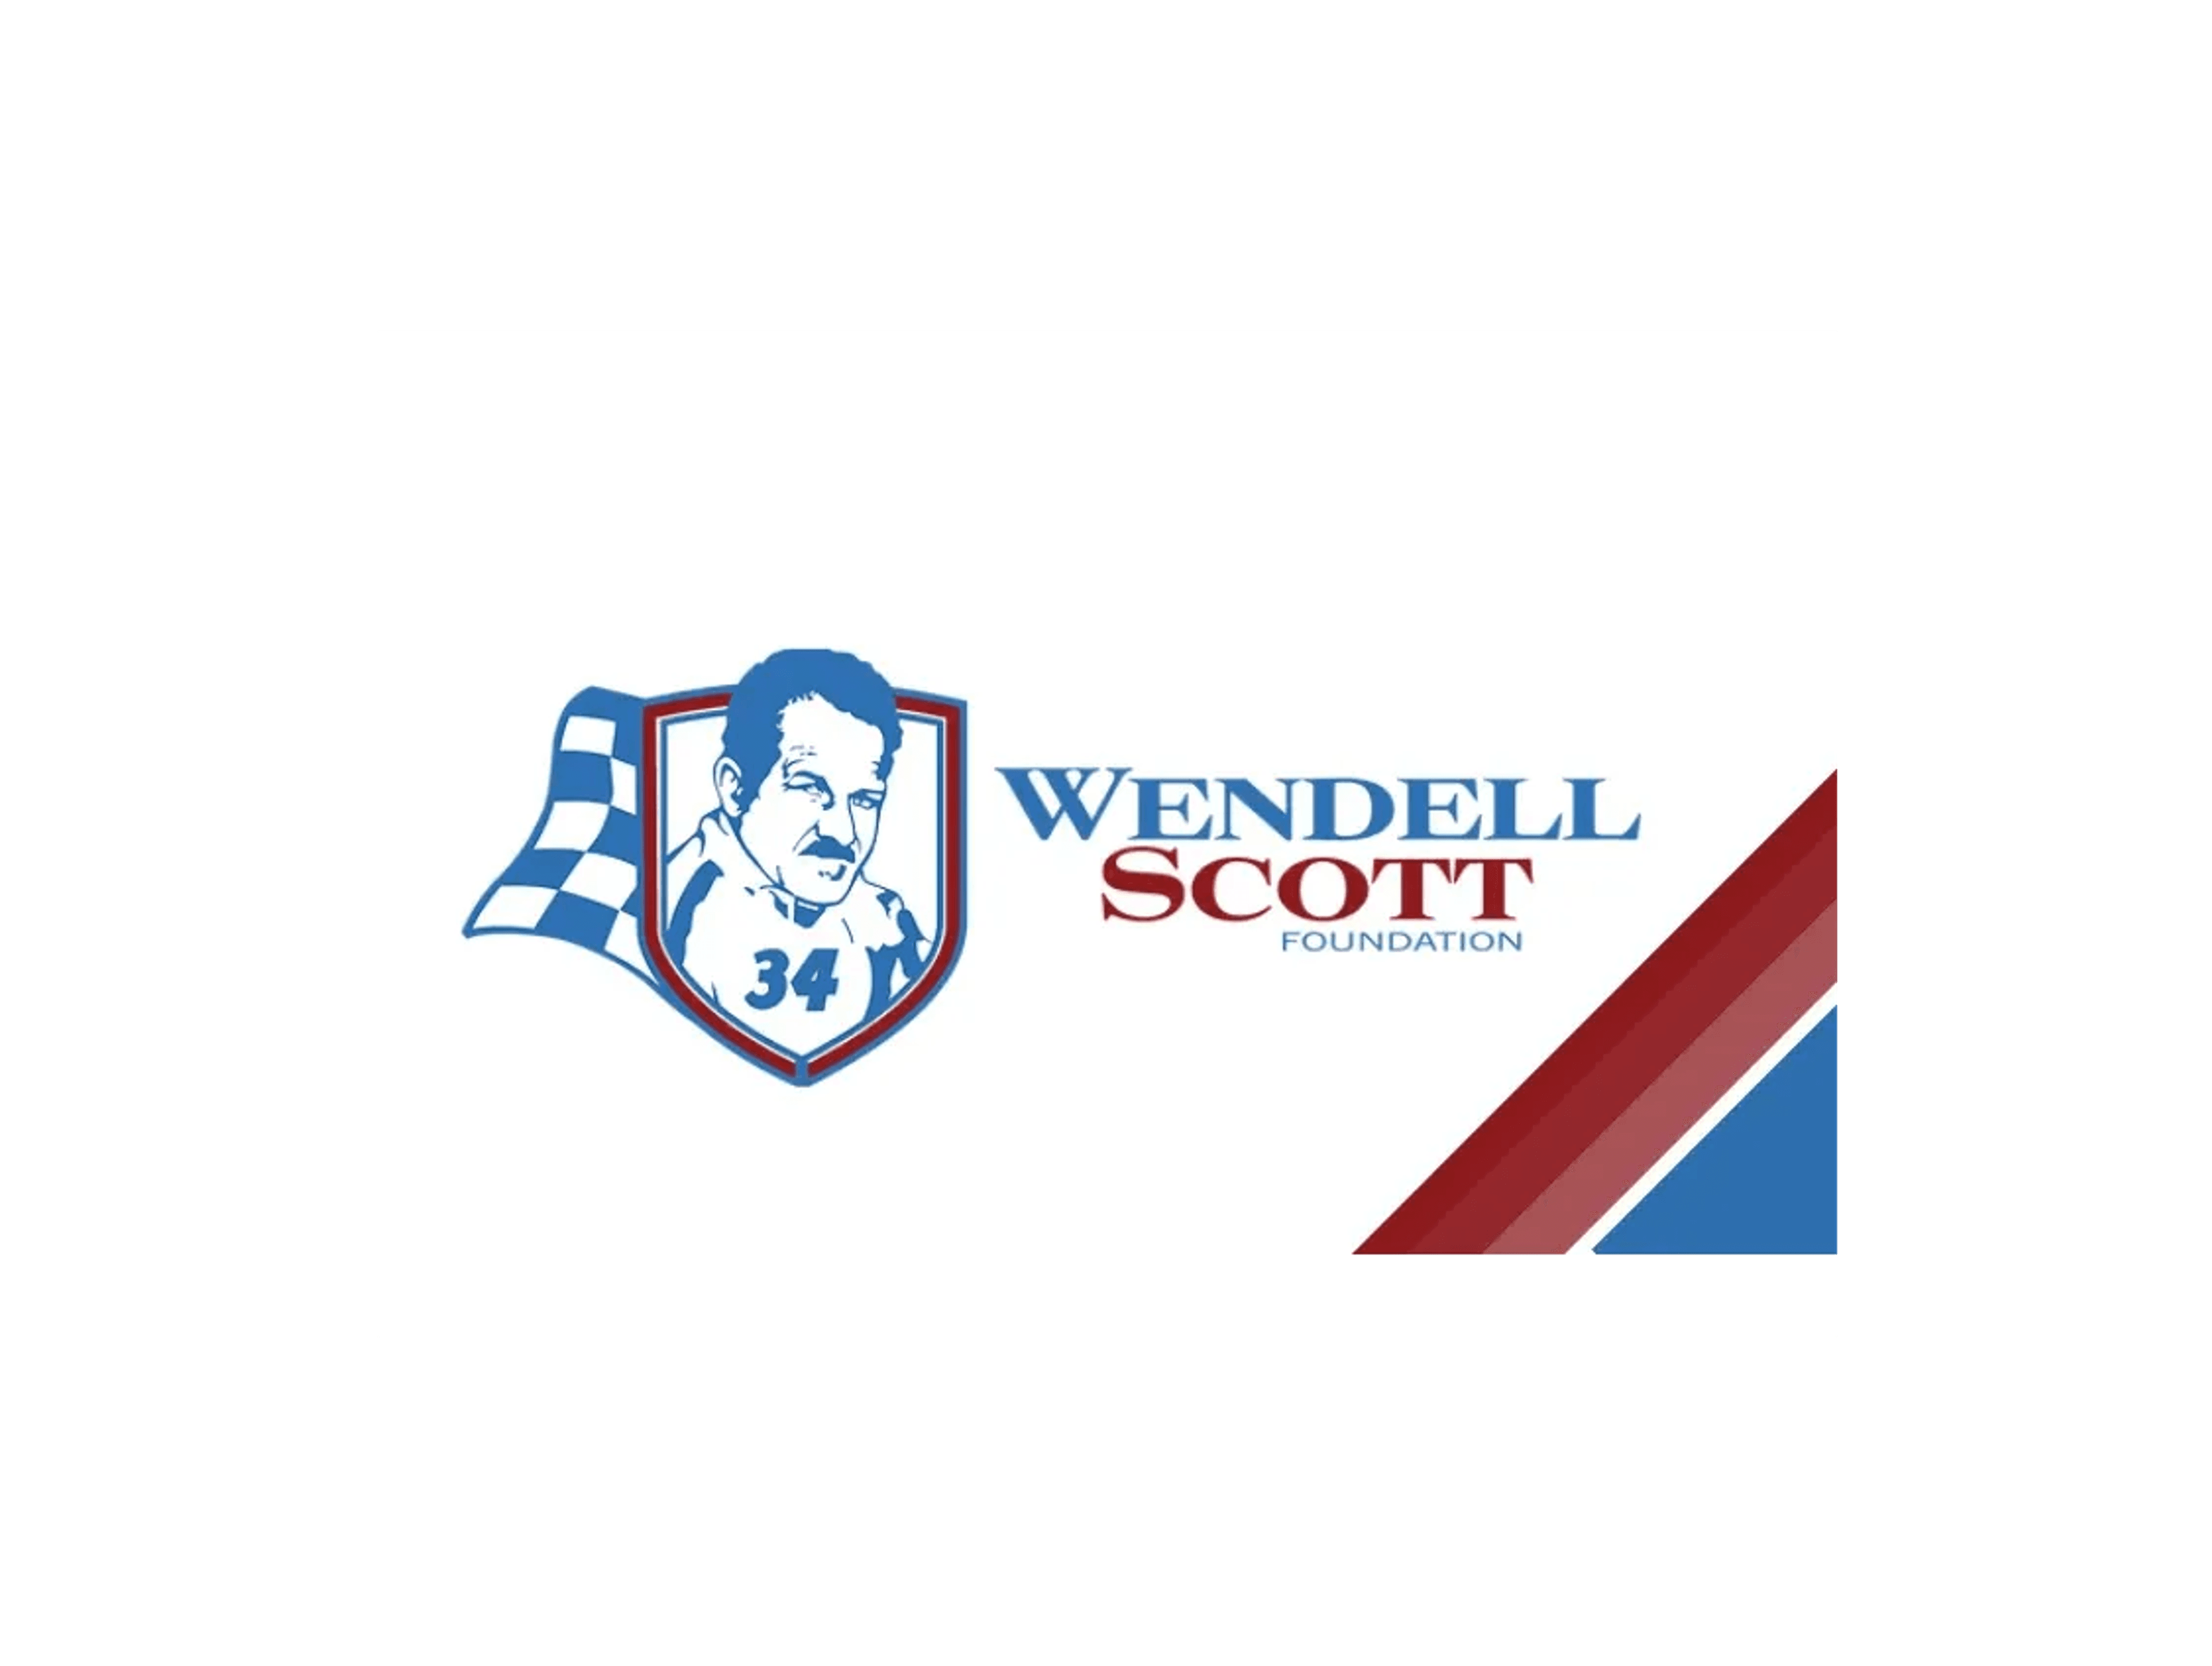 Wendell Scott Foundation Inc